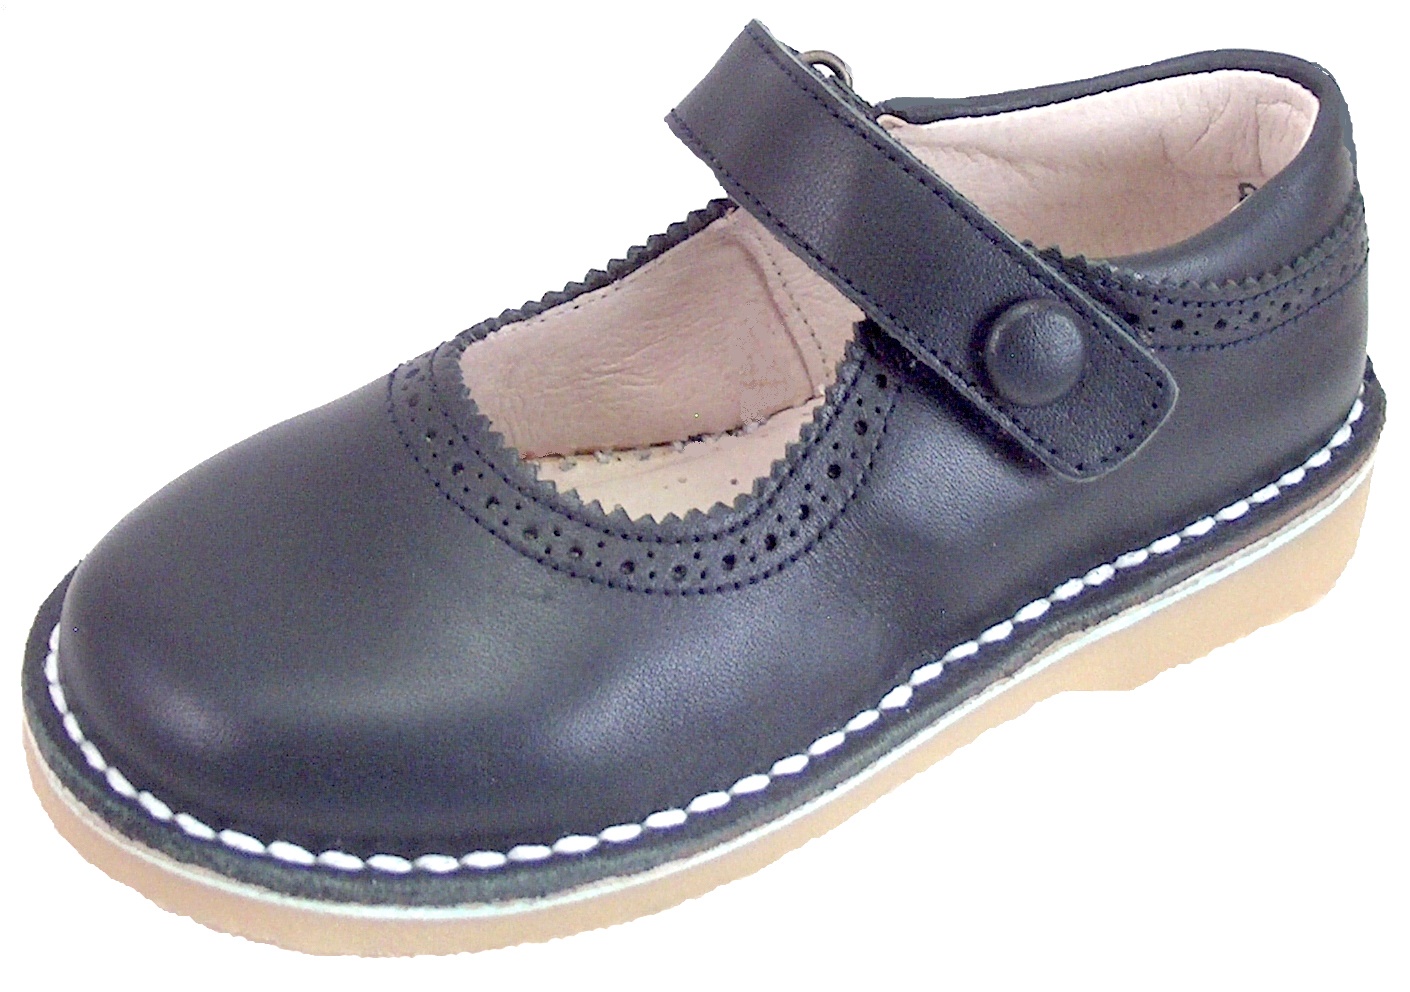 5Z8611 - Navy Blue School Shoes - Euro 24 Size 7